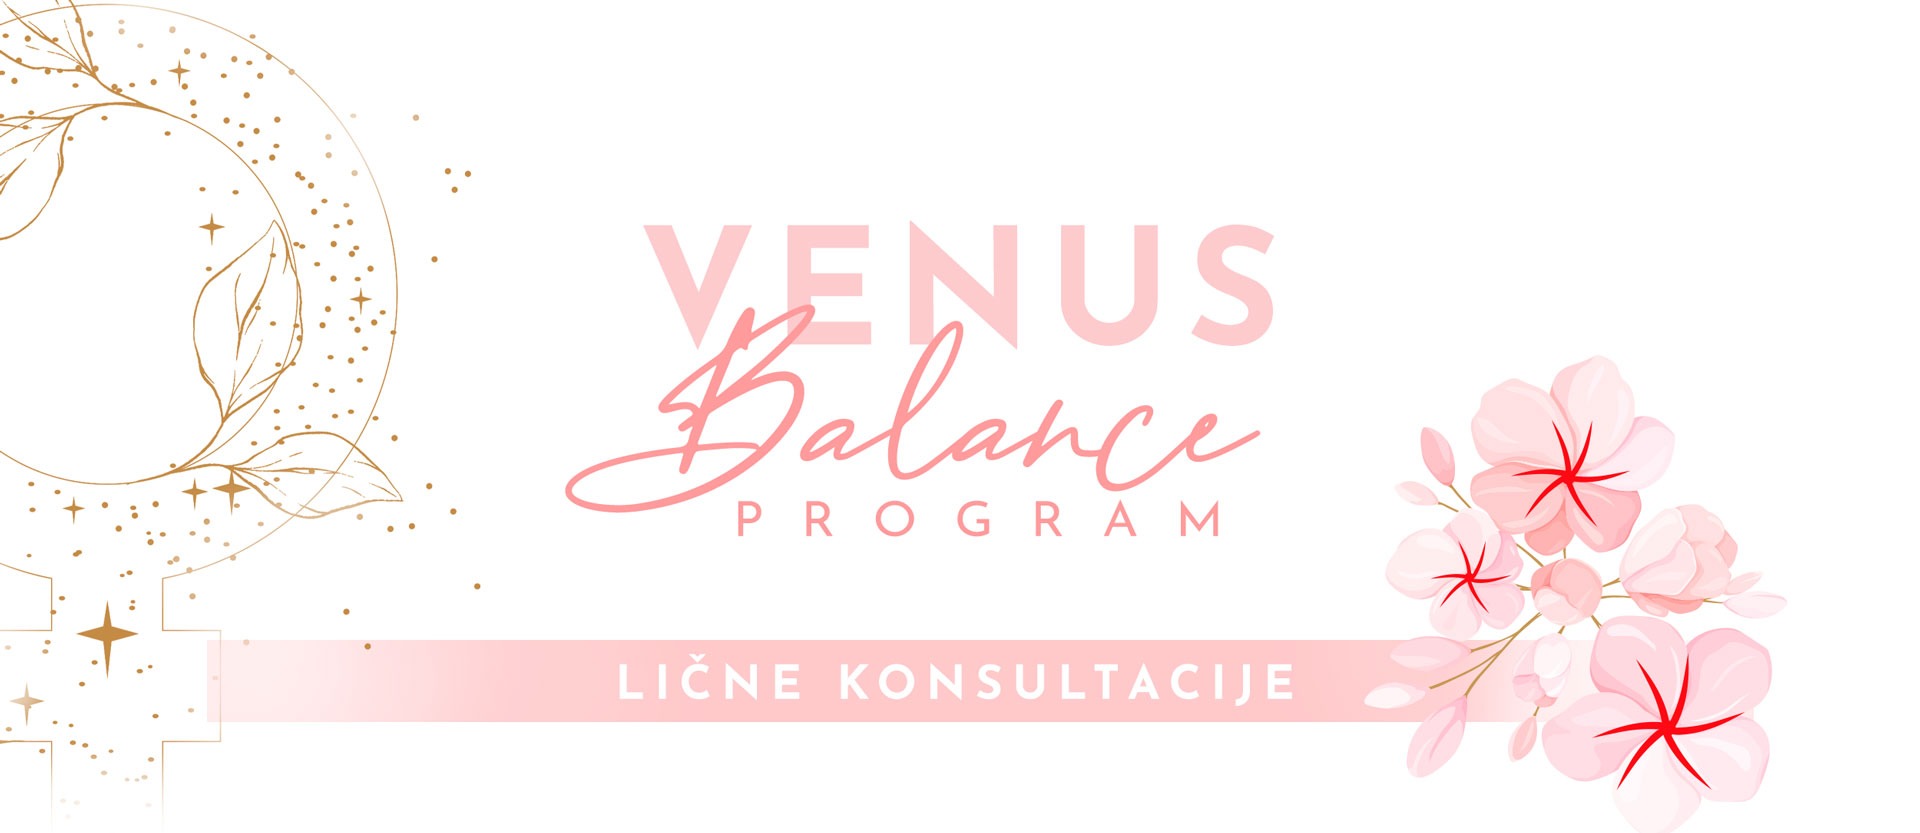 Venus balace